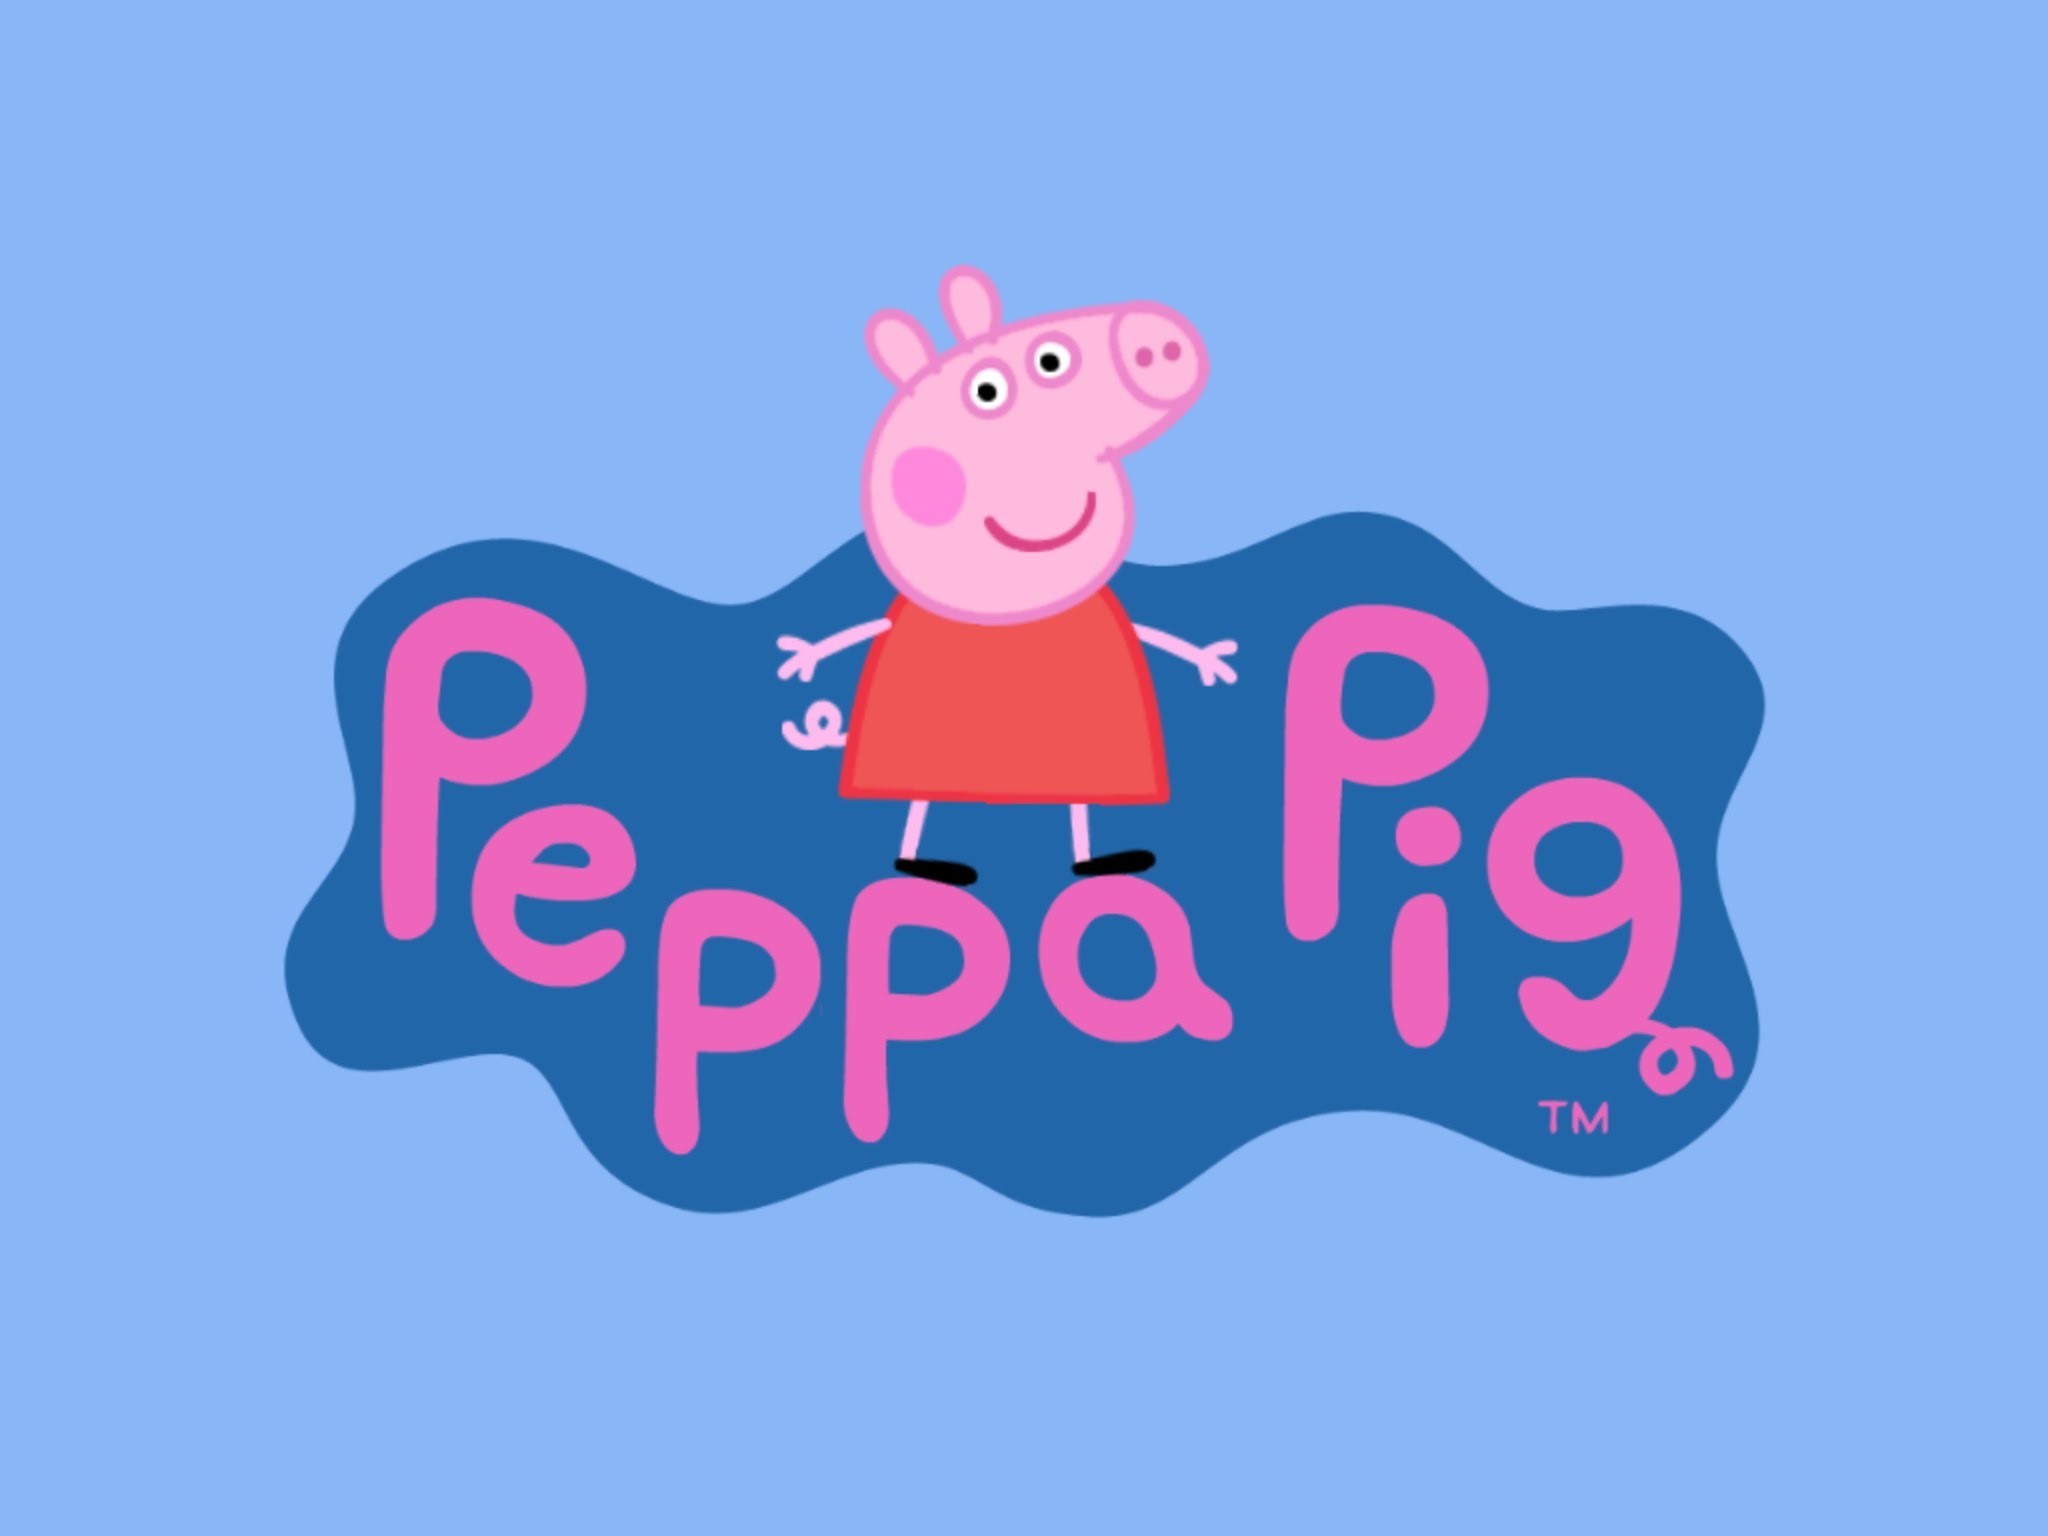 peppa pig wallpaper hd,pink,text,cartoon,logo,font